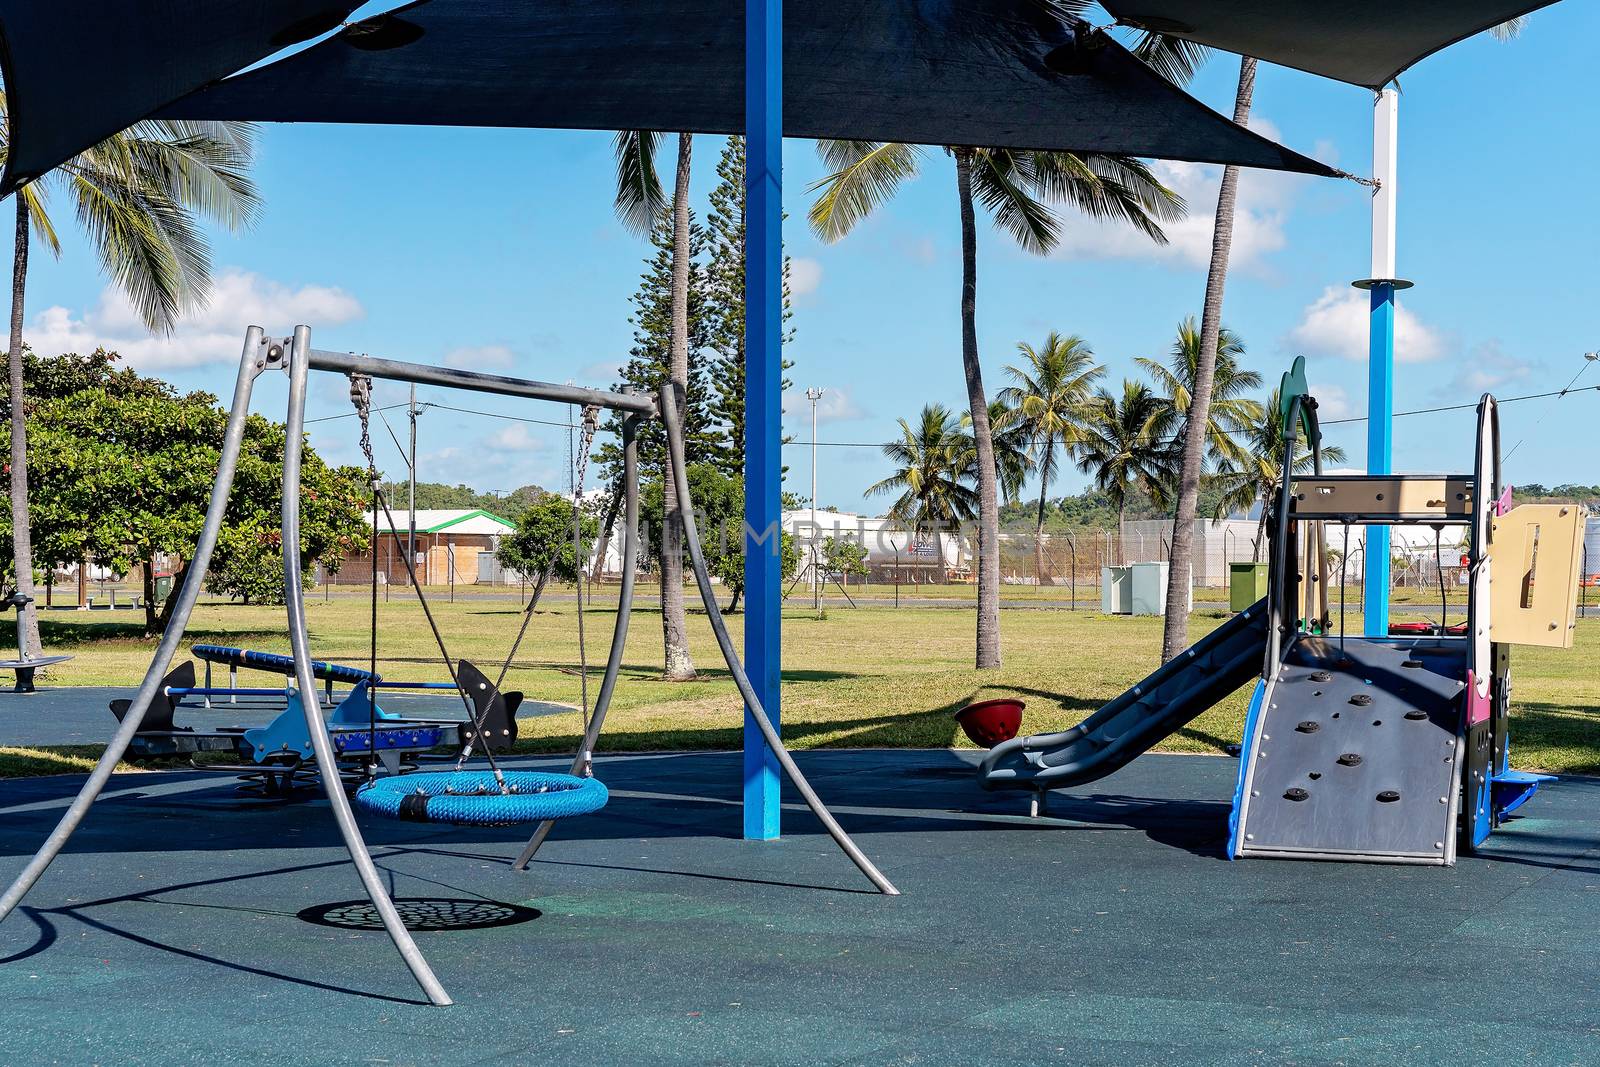 Playground empty of children, no-one to play